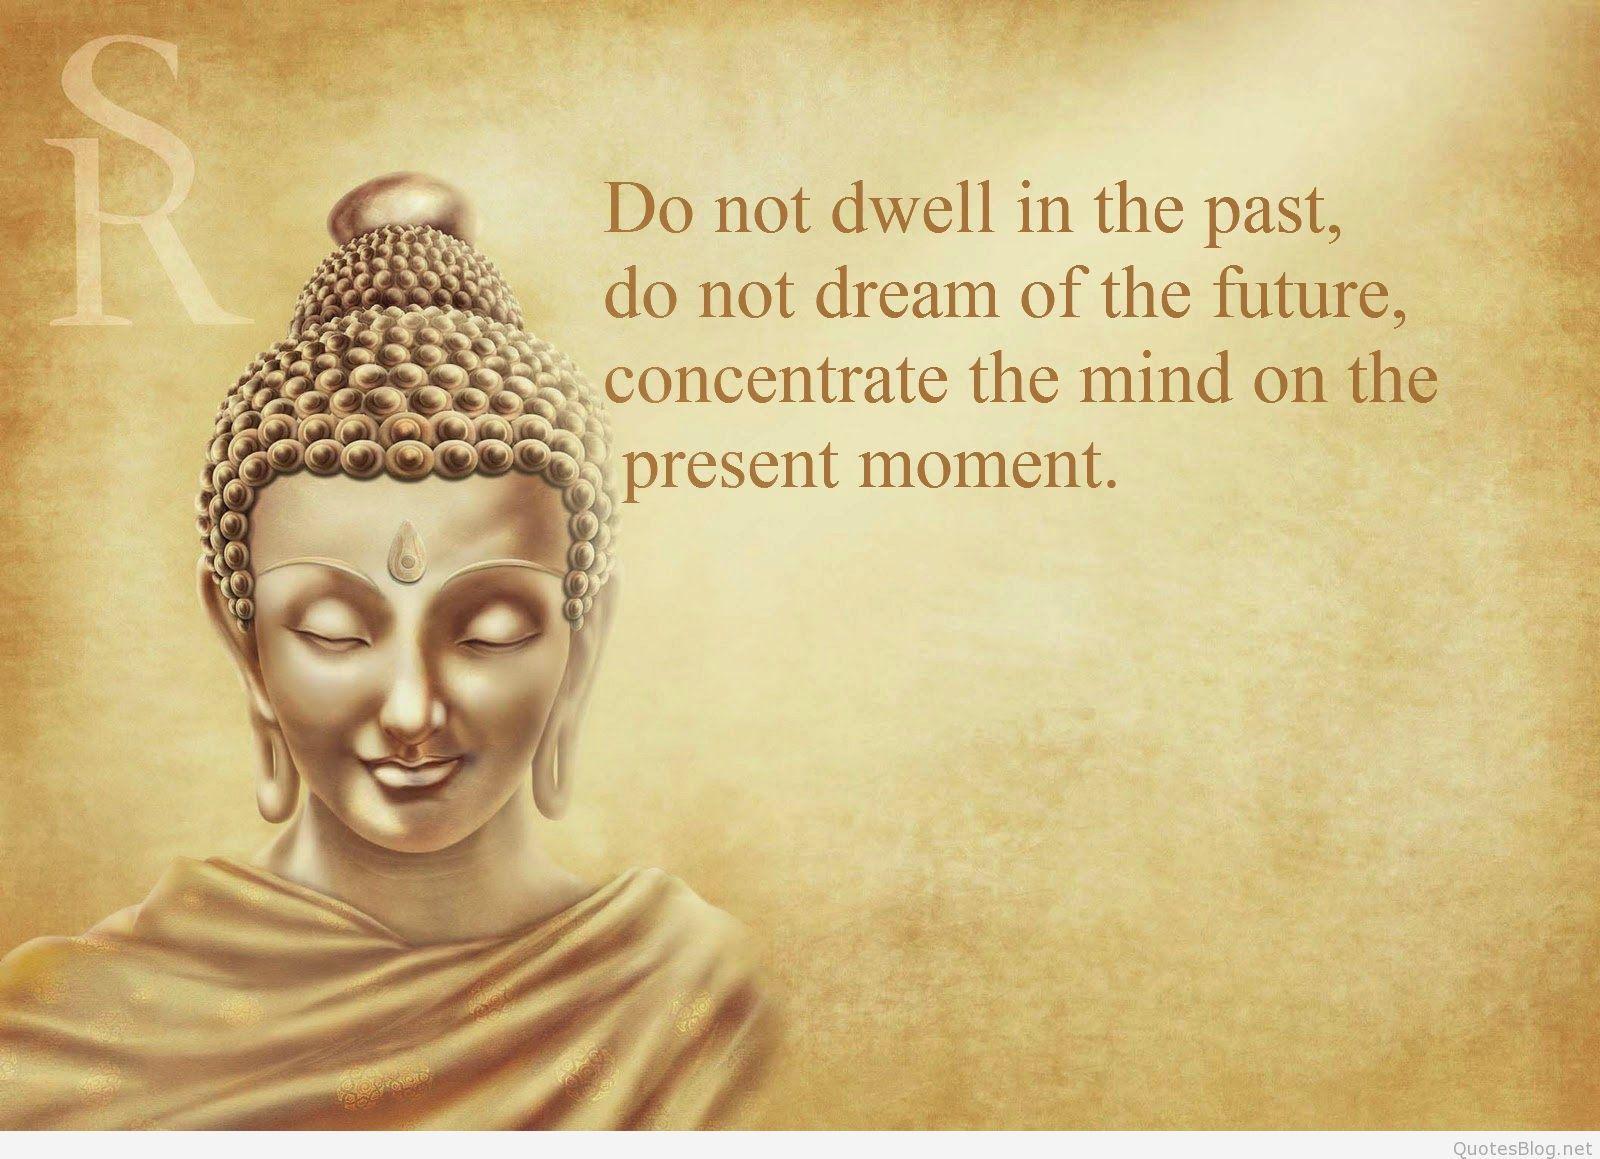 Top Best Budha quotes image and wallpaper Budha